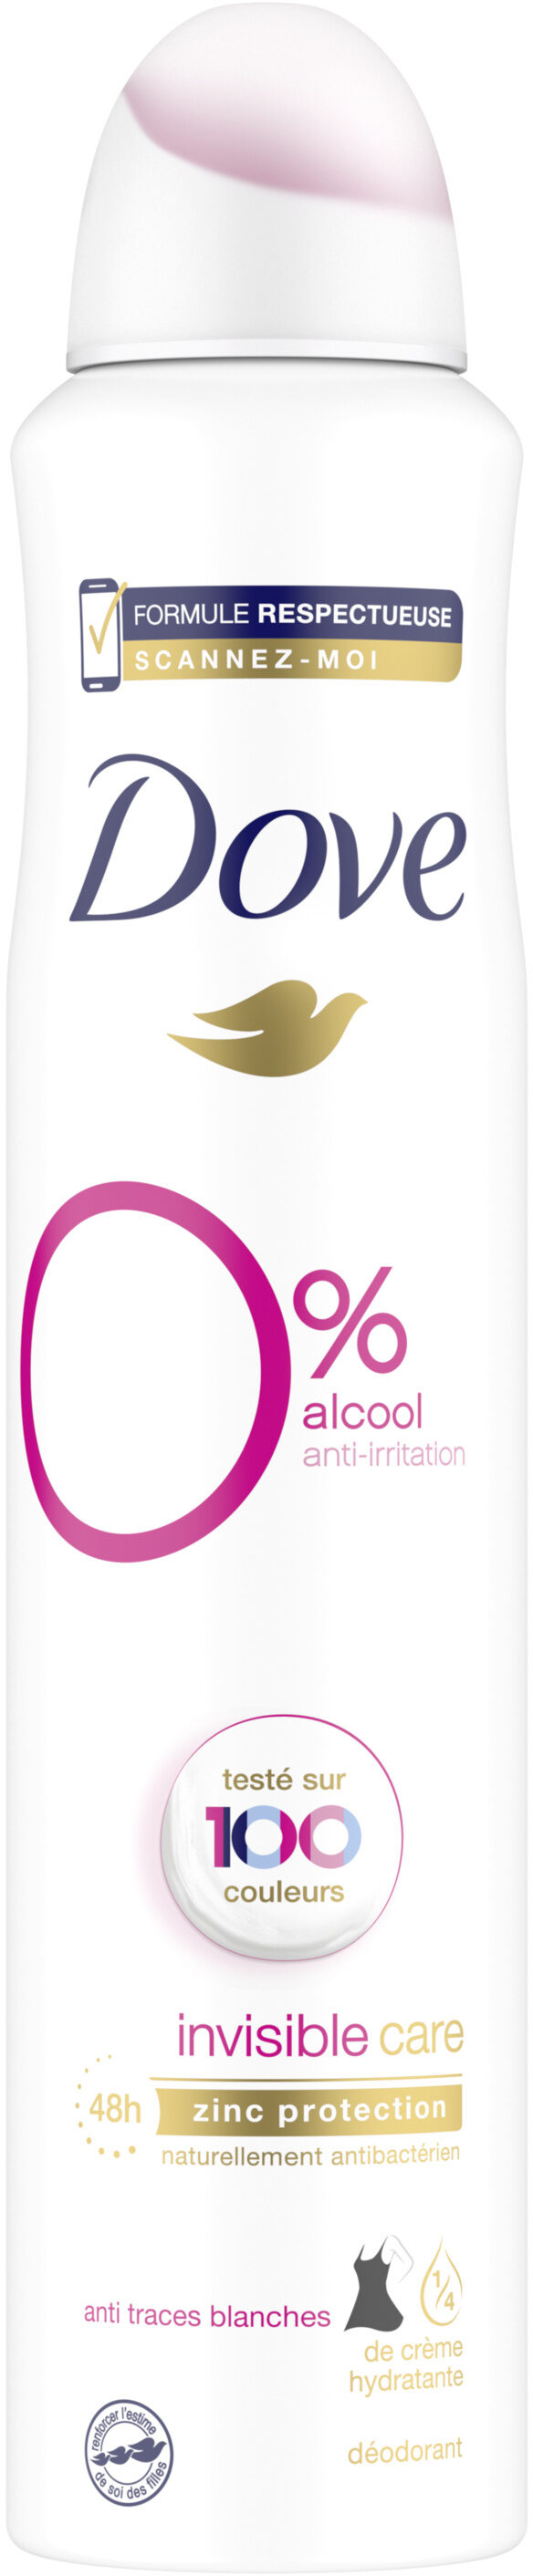 DOVE 0% Déodorant Femme Spray Anti-irritation Invisible Care 200ml - Produto - fr